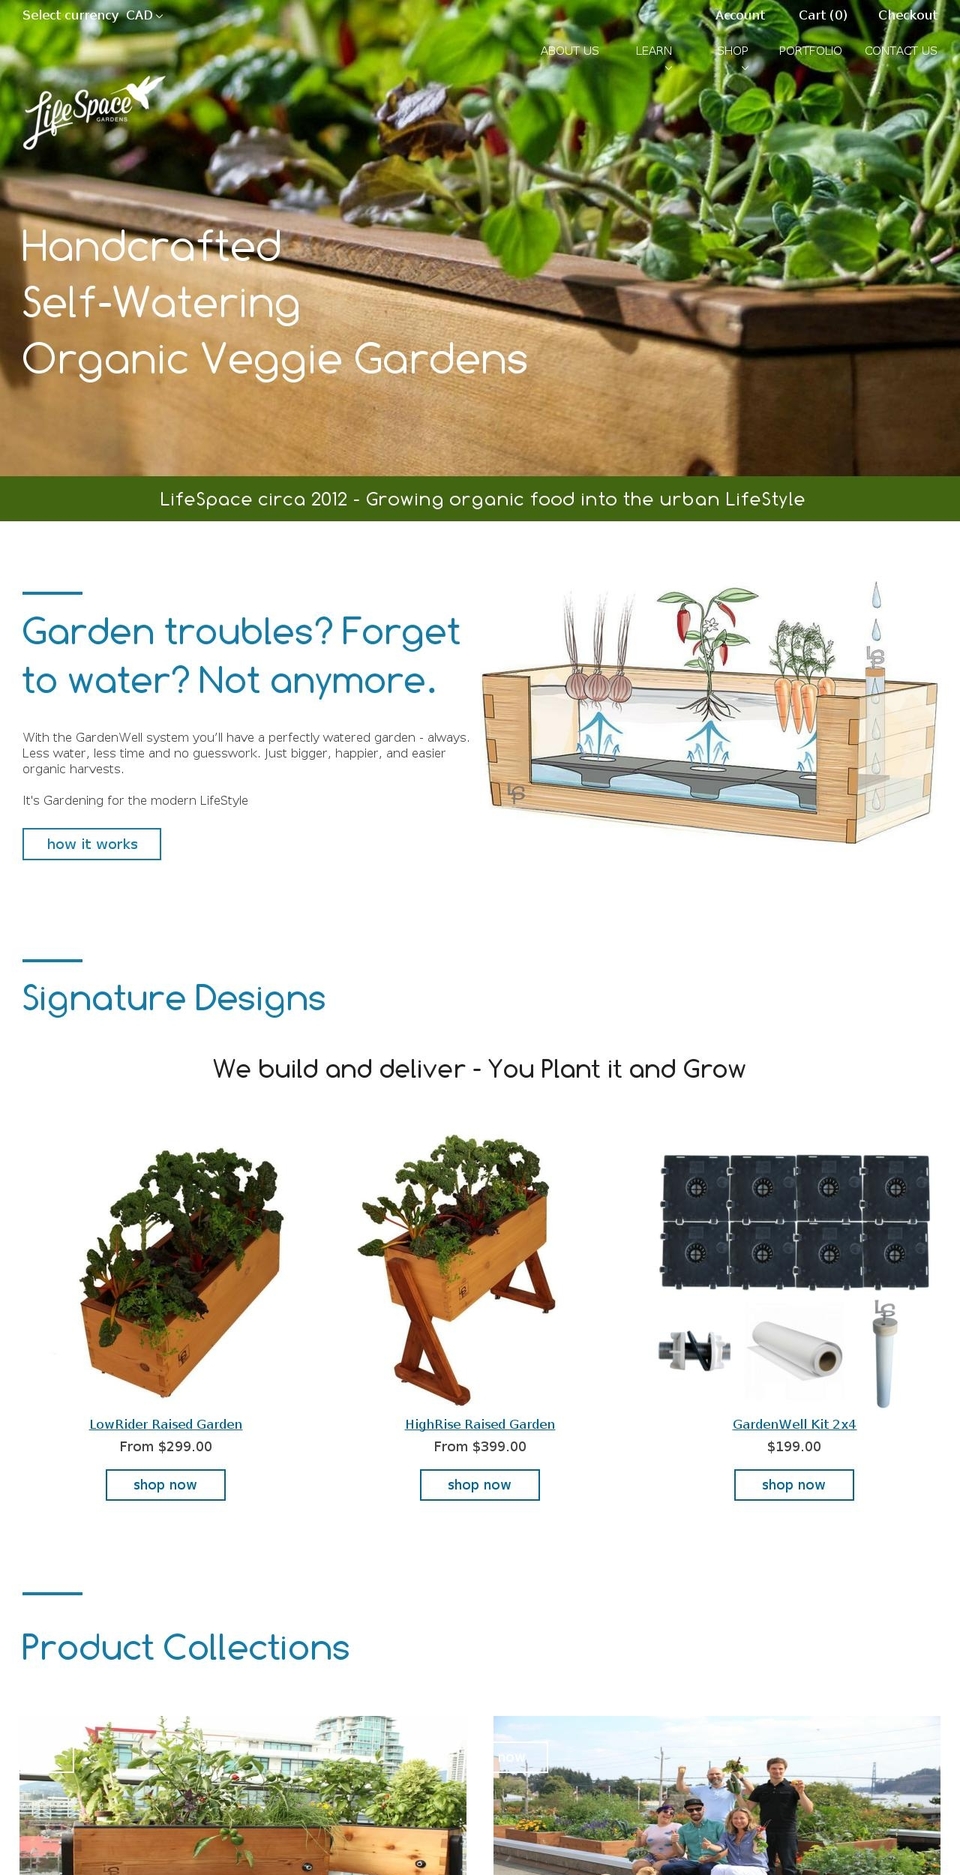 lifespace.garden shopify website screenshot